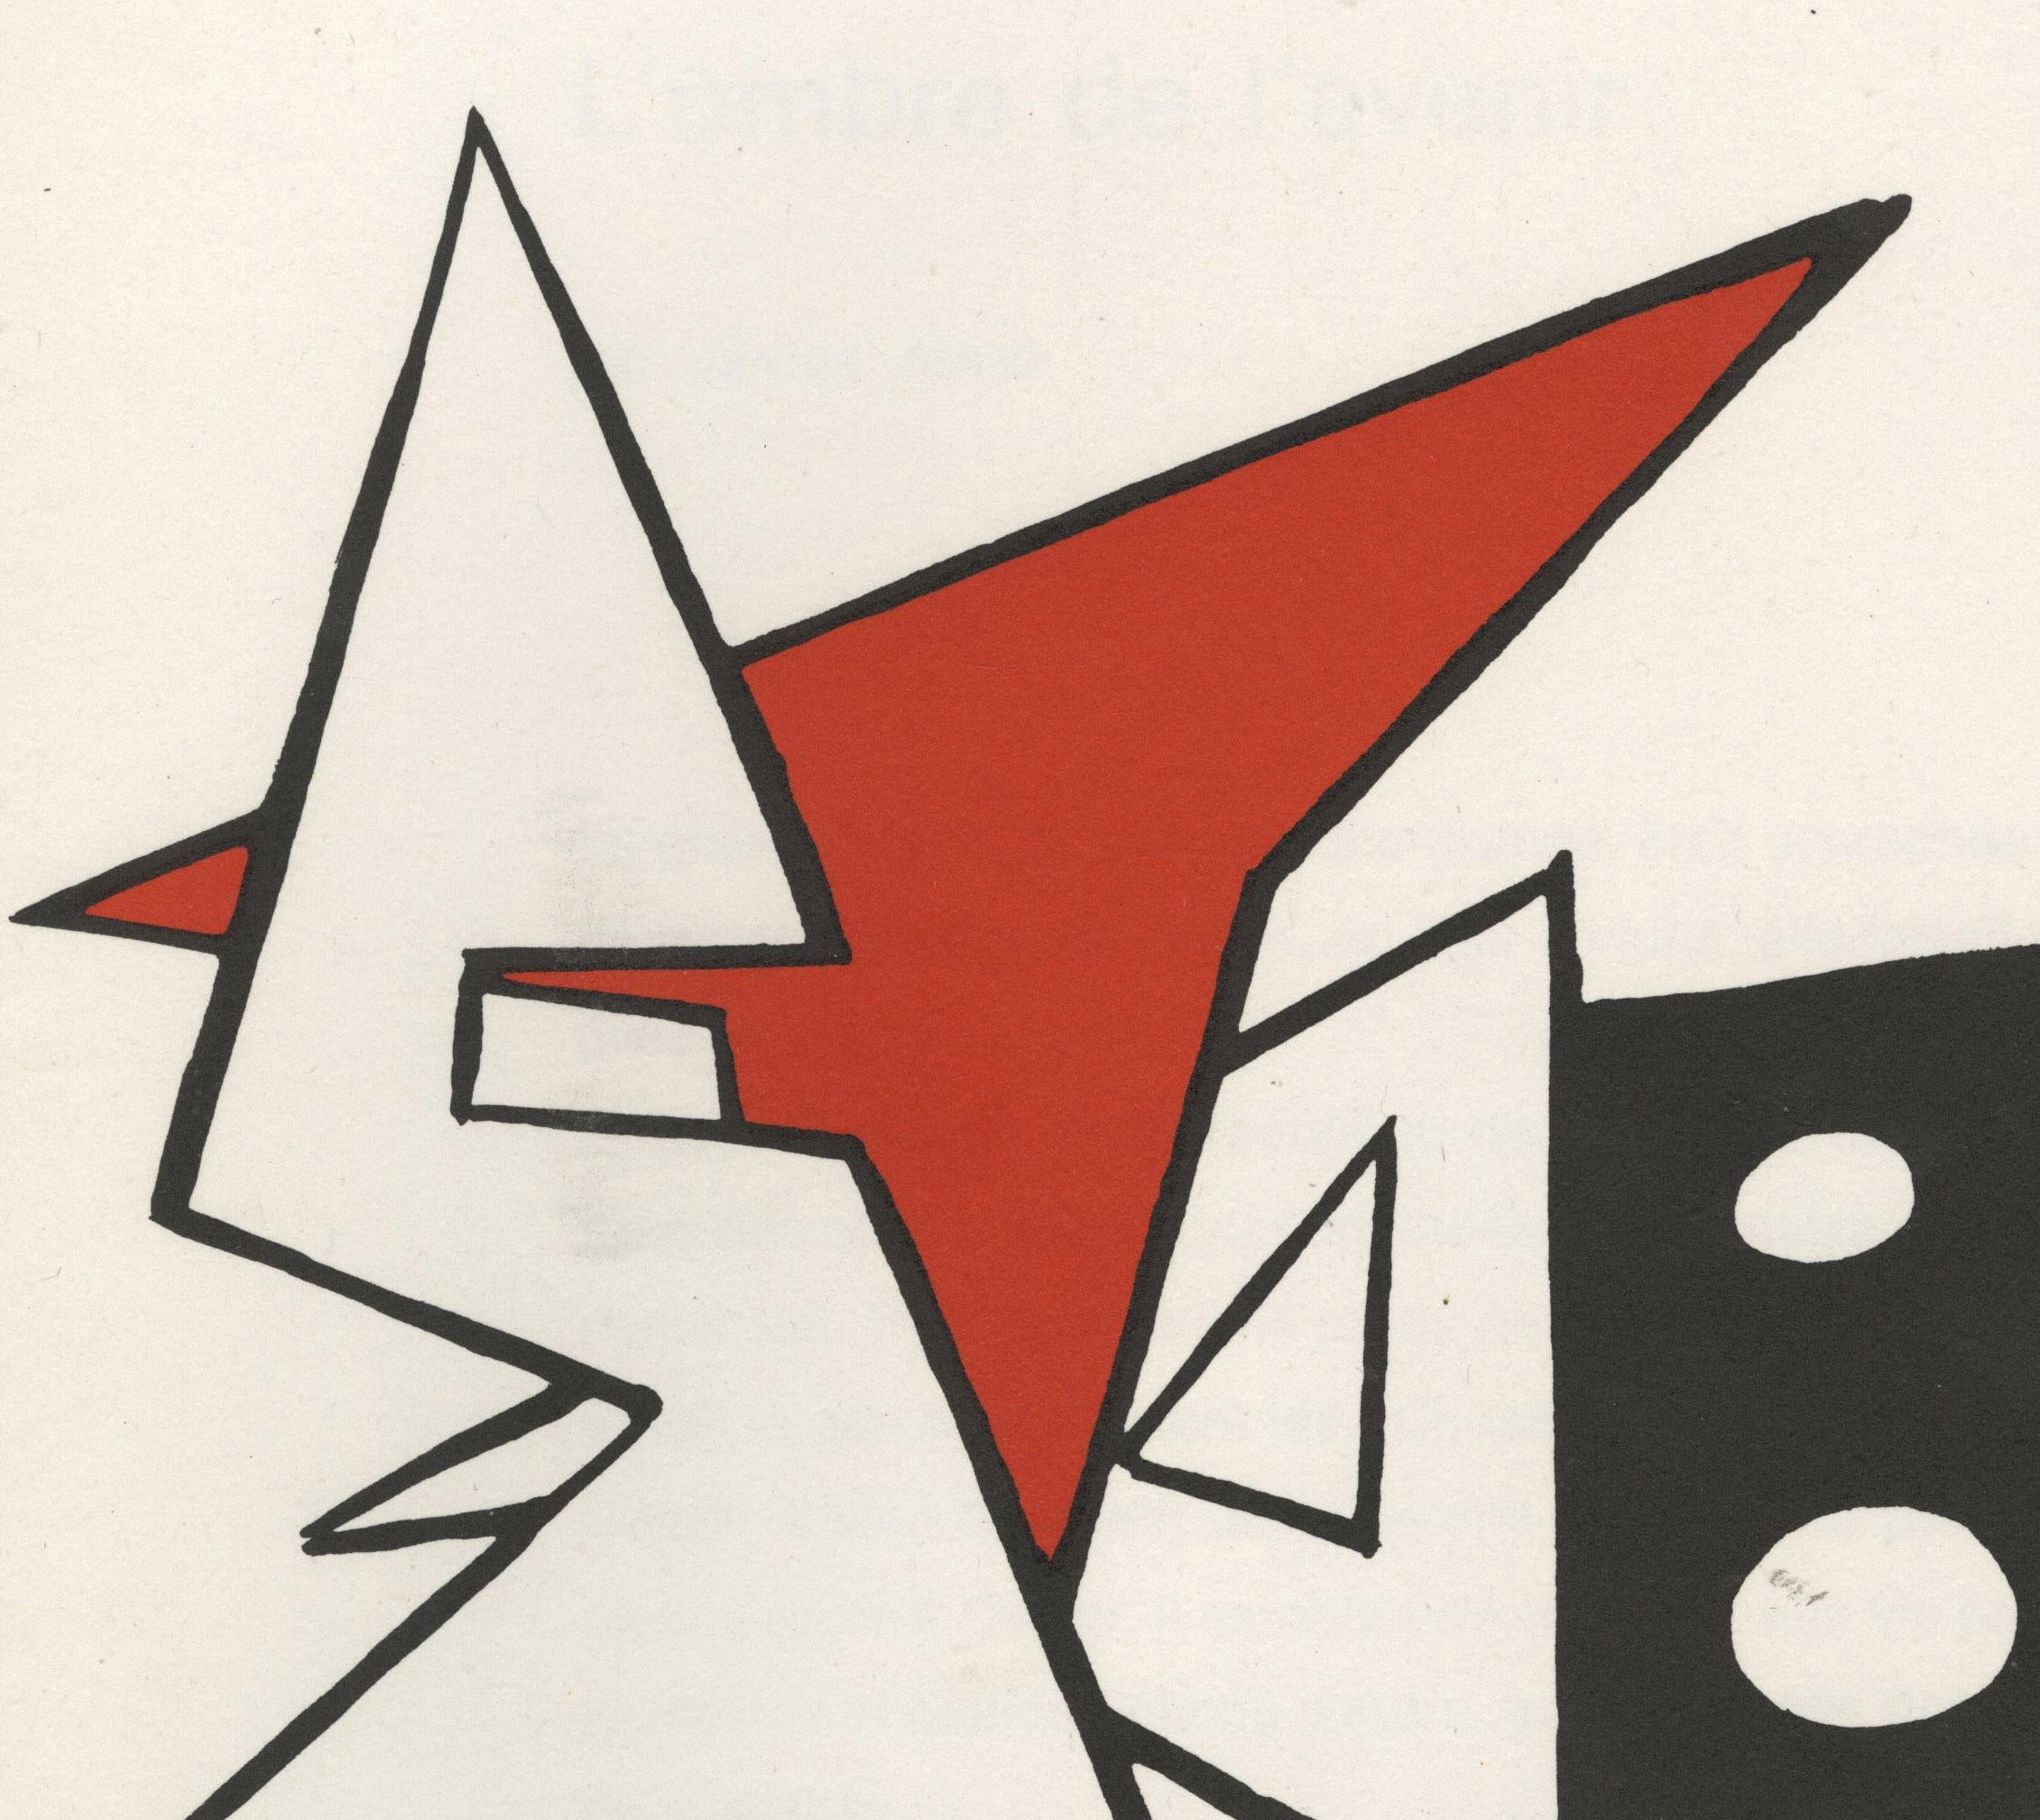 Derrier le Miroir, cover, Volume 141 - Print by Alexander Calder